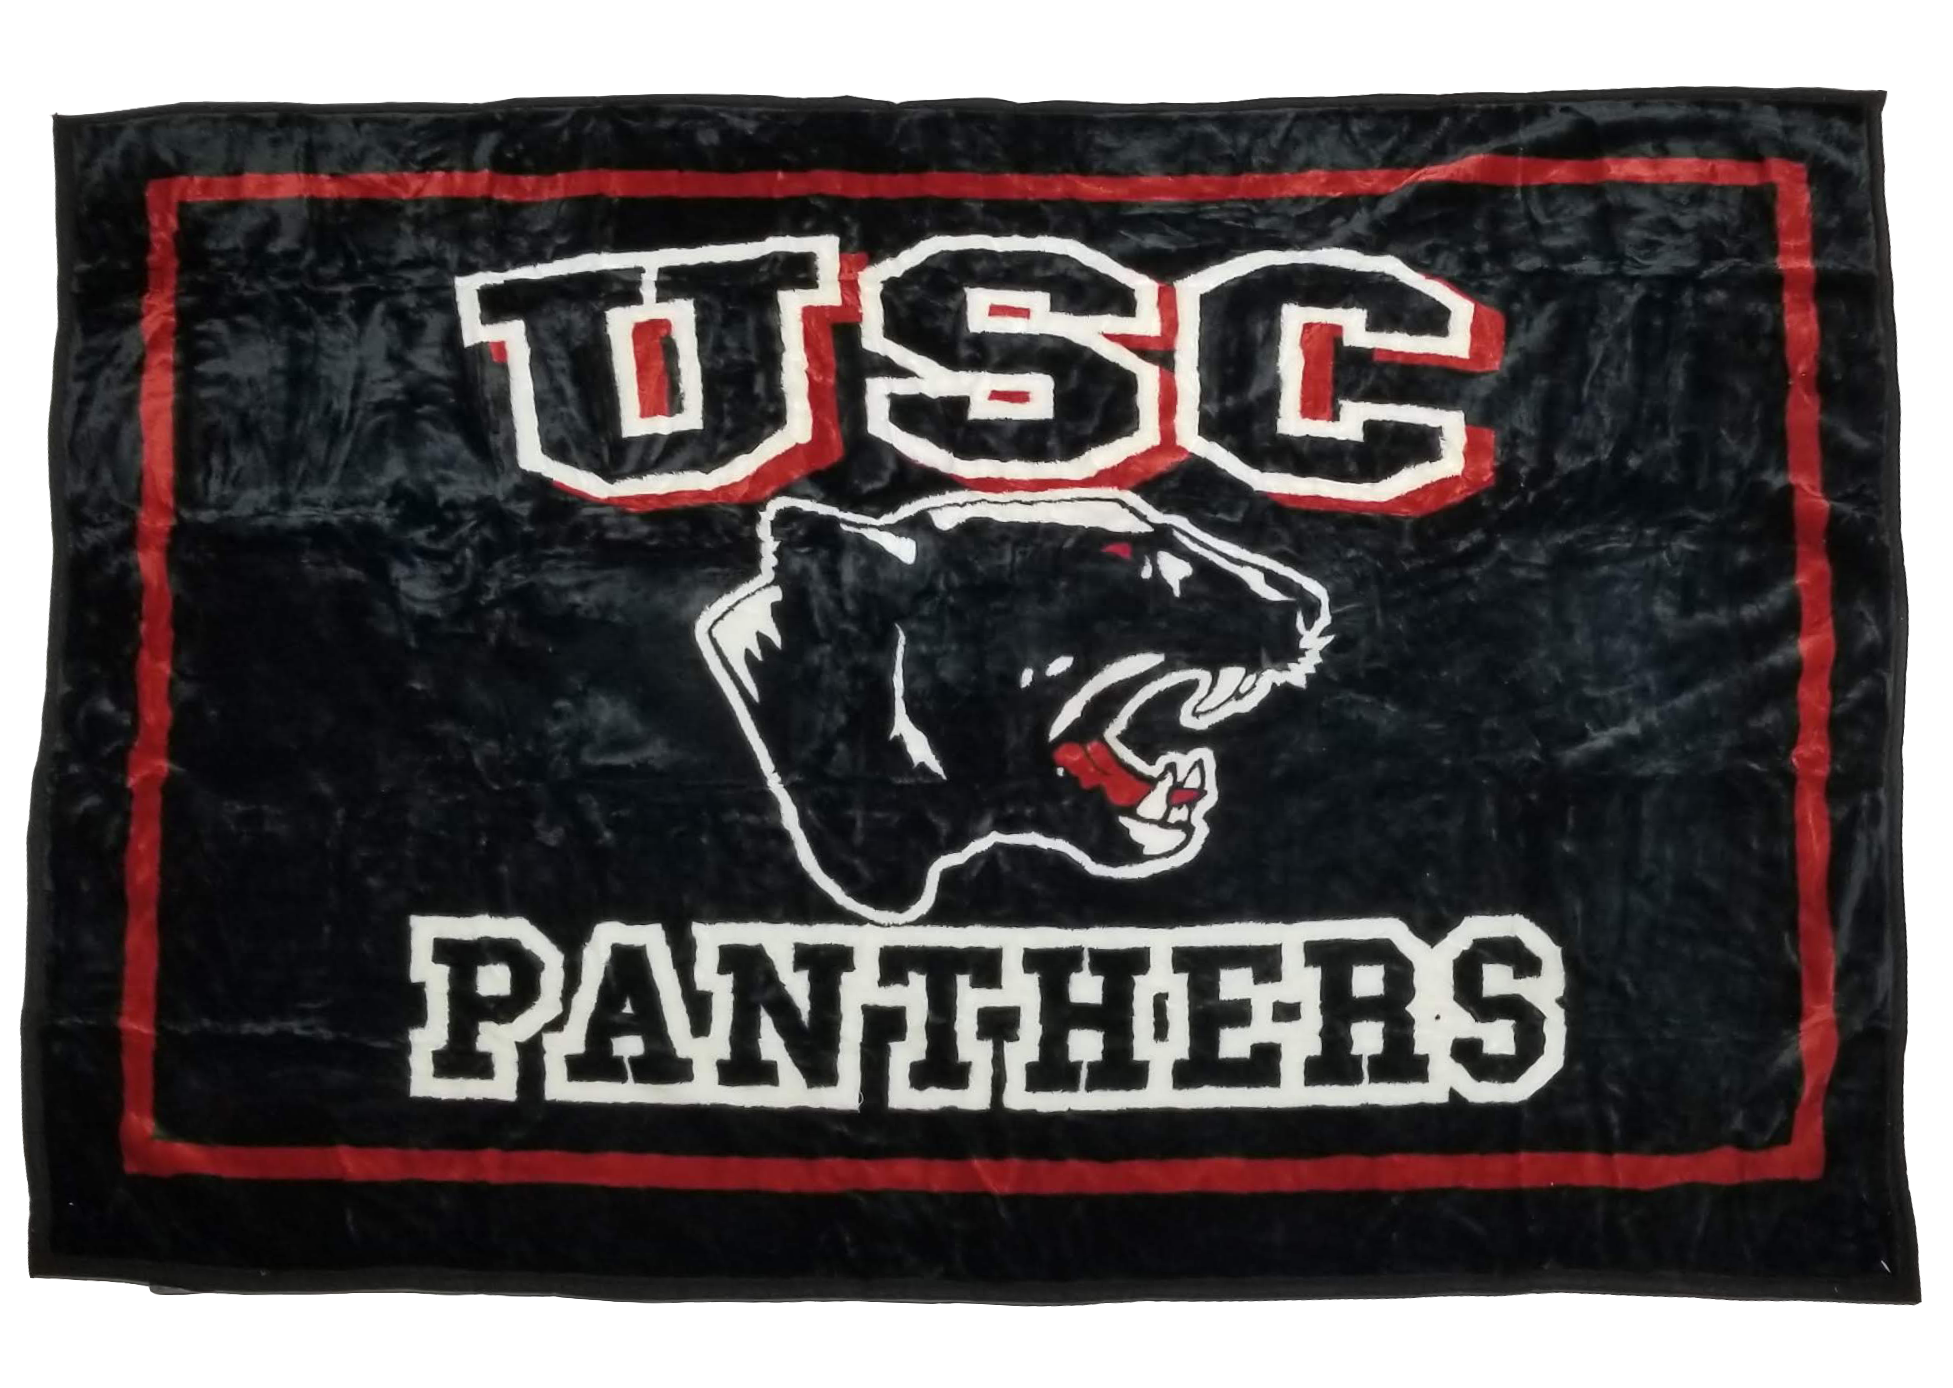 Upper Saint Clair Panthers